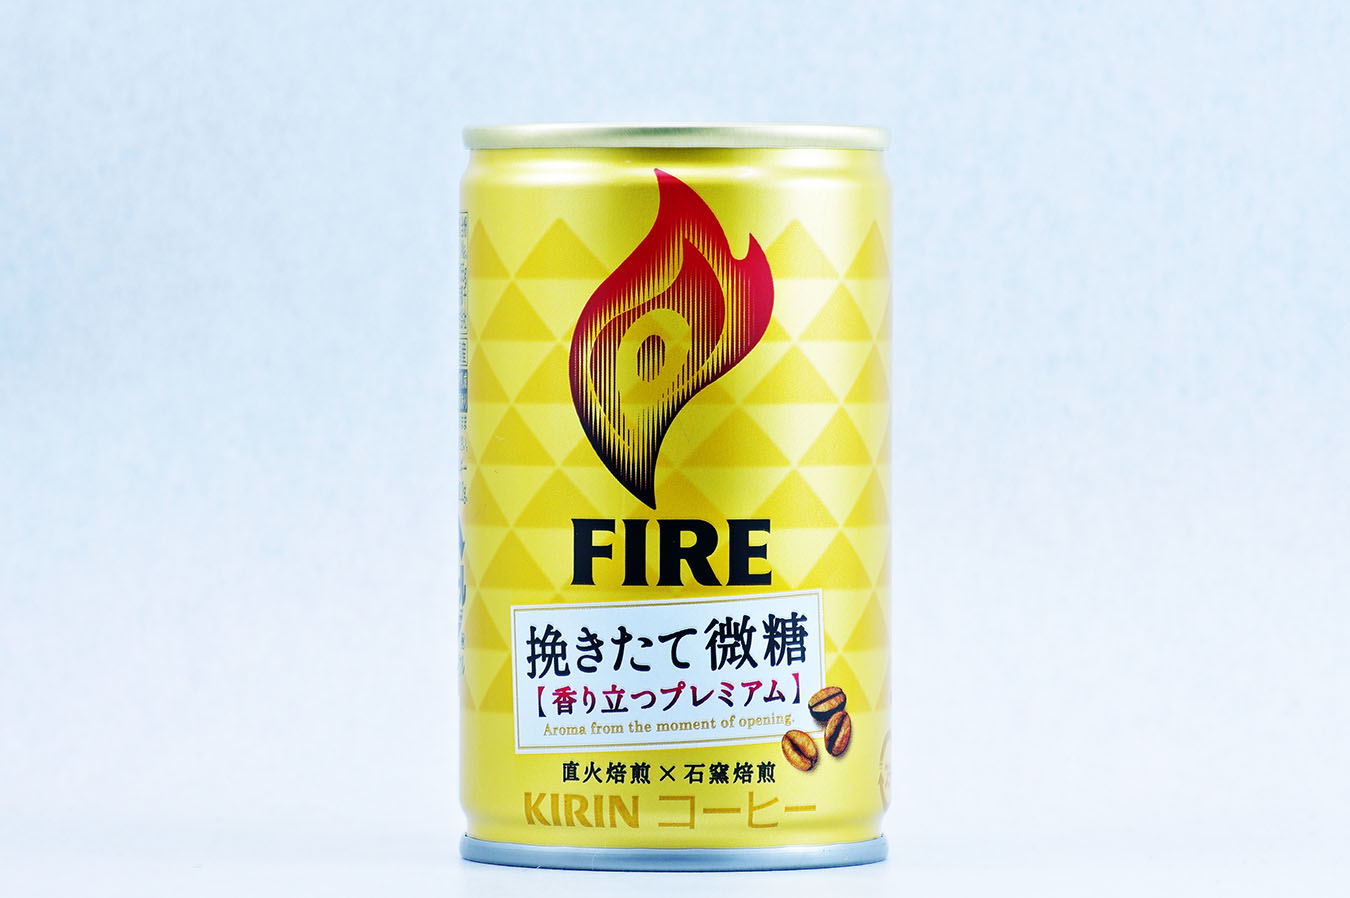 FIRE 挽きたて微糖 155g缶 2015年11月